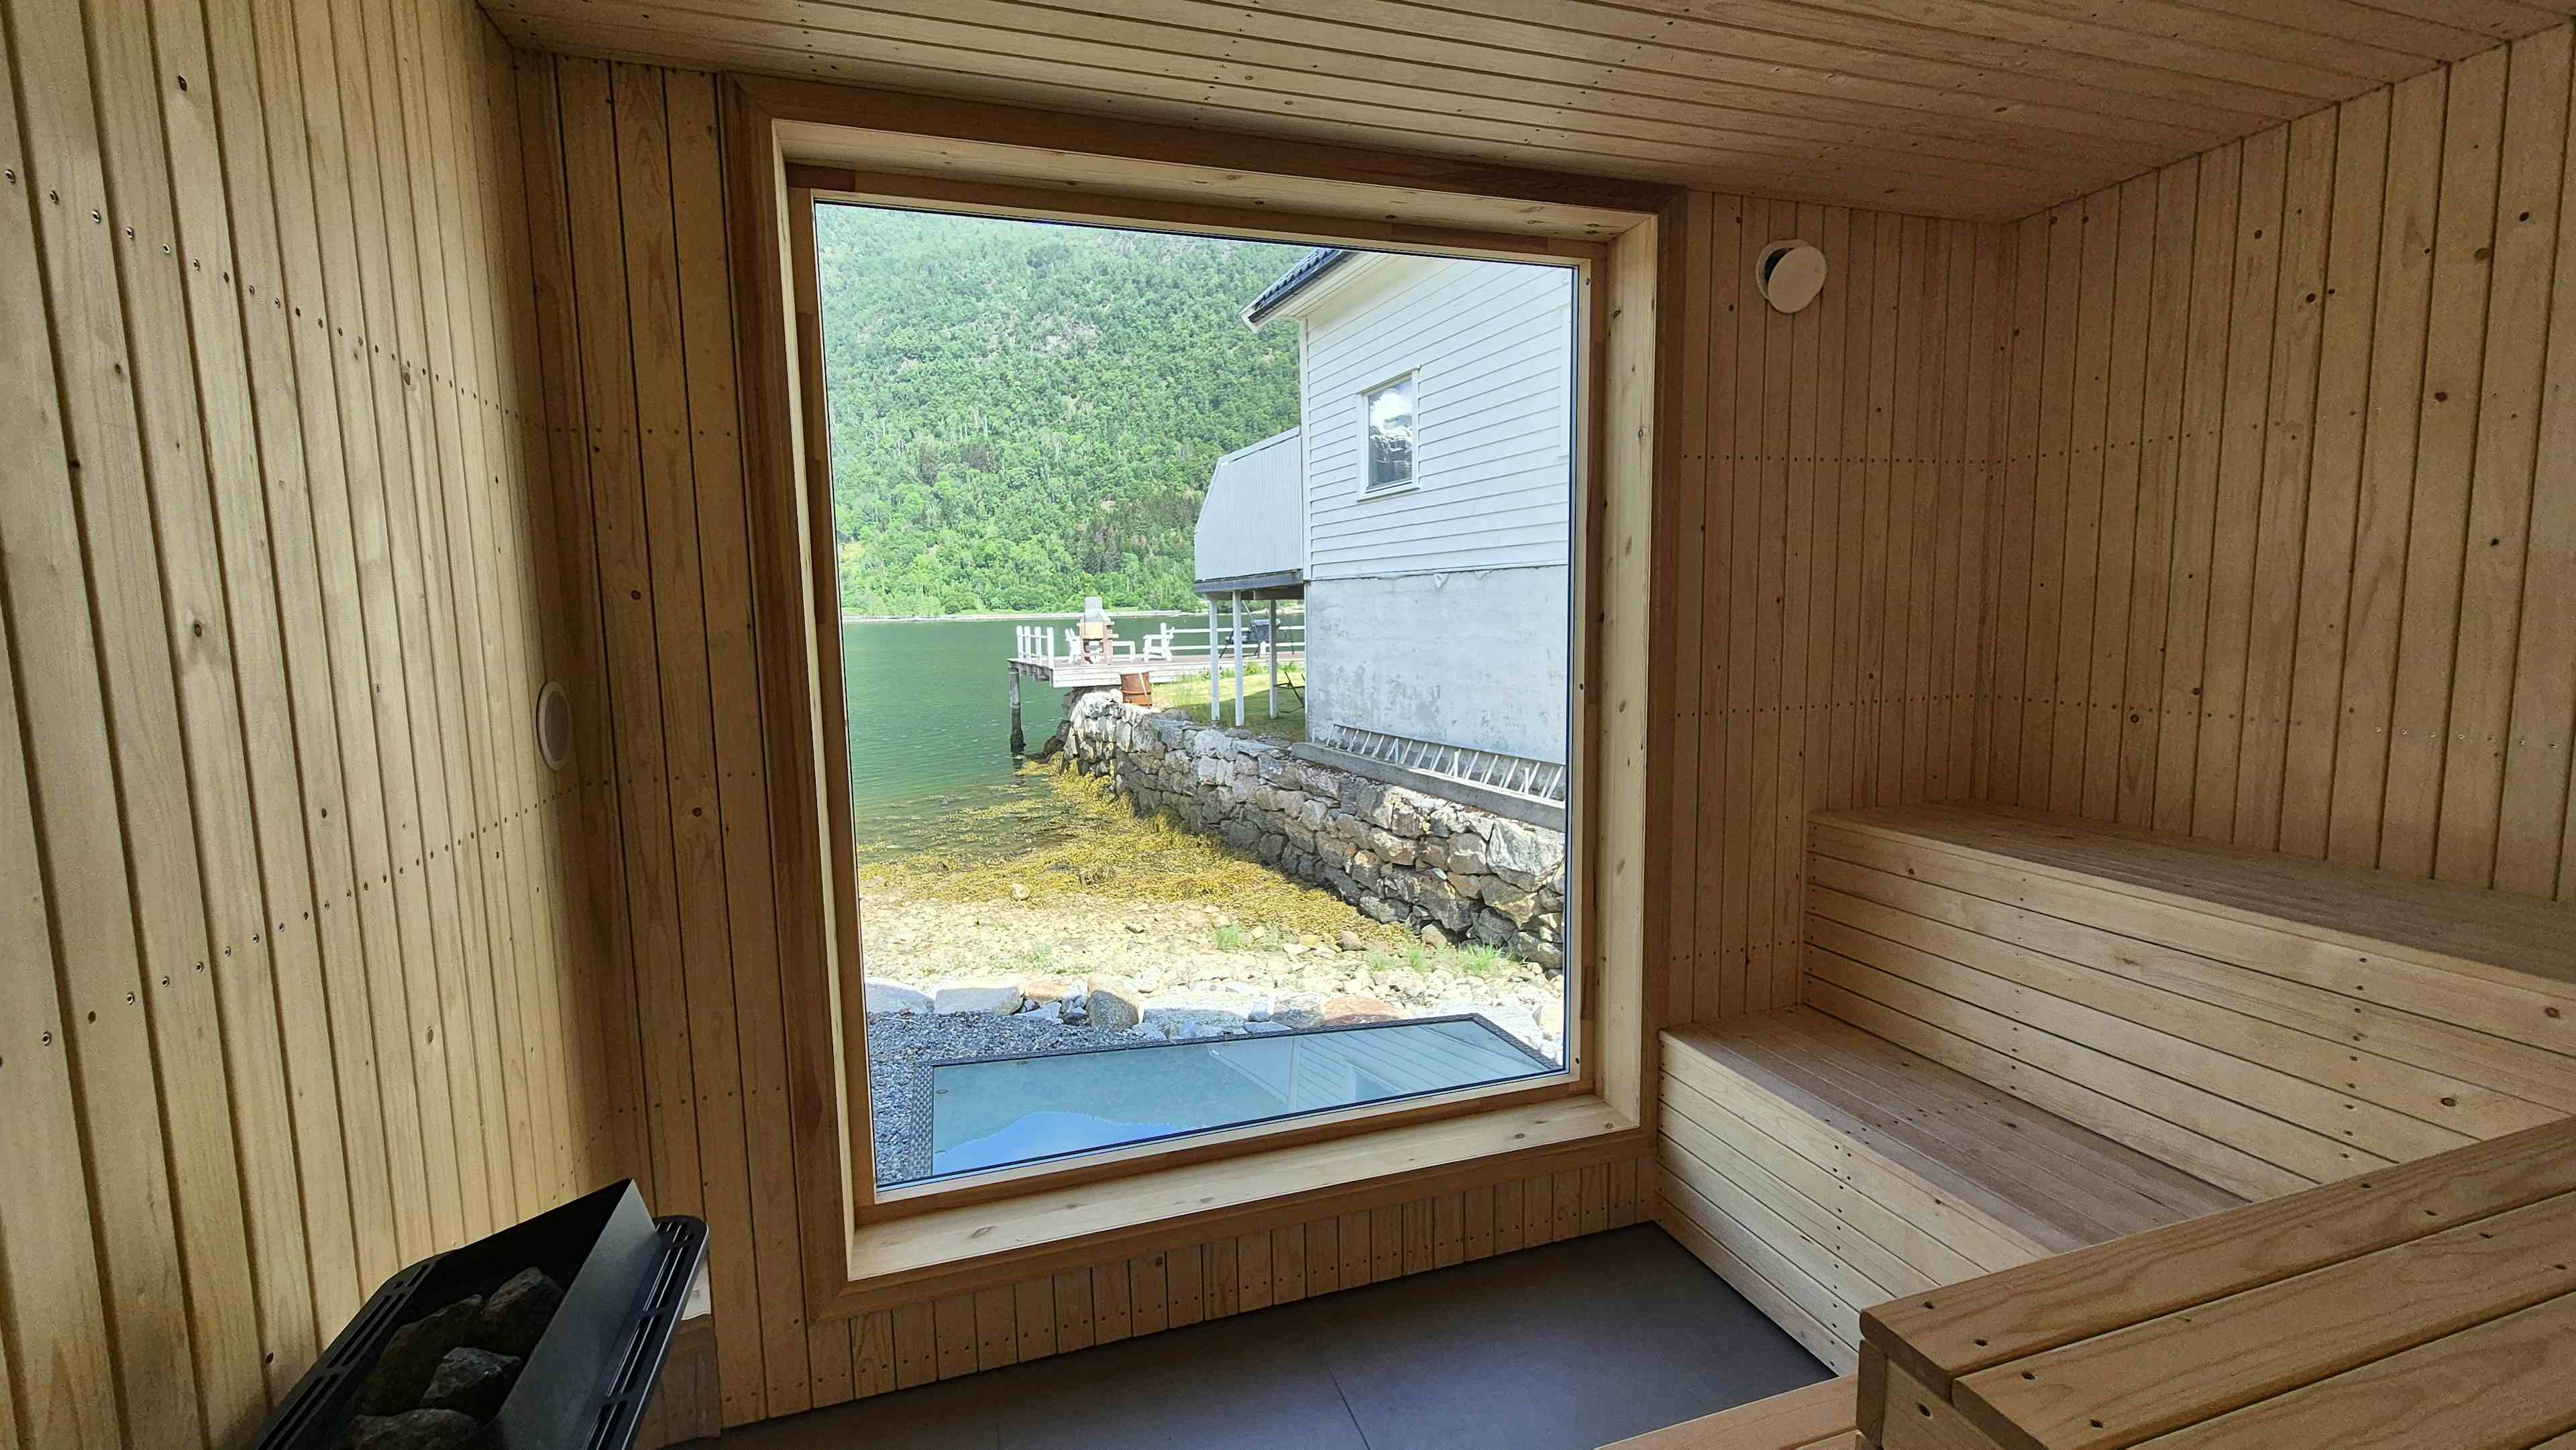 Sognefjord Cabins, Balestrand